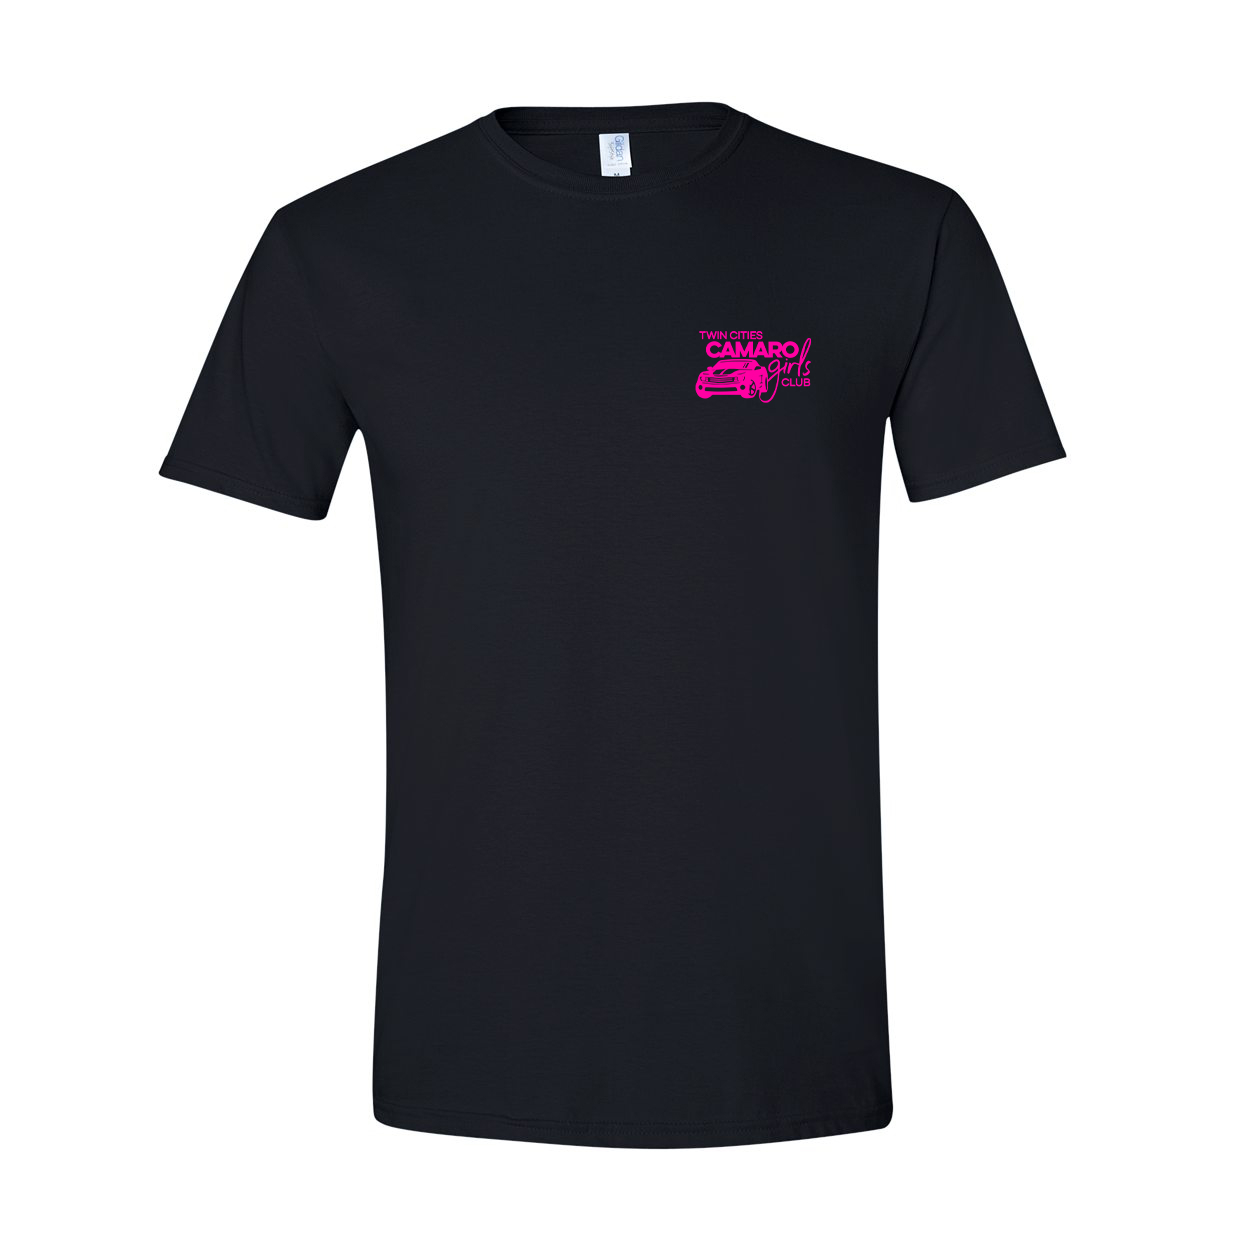 Twin Cities Camaro Girls Club Night Out T-Shirt Black (Pink Logo)